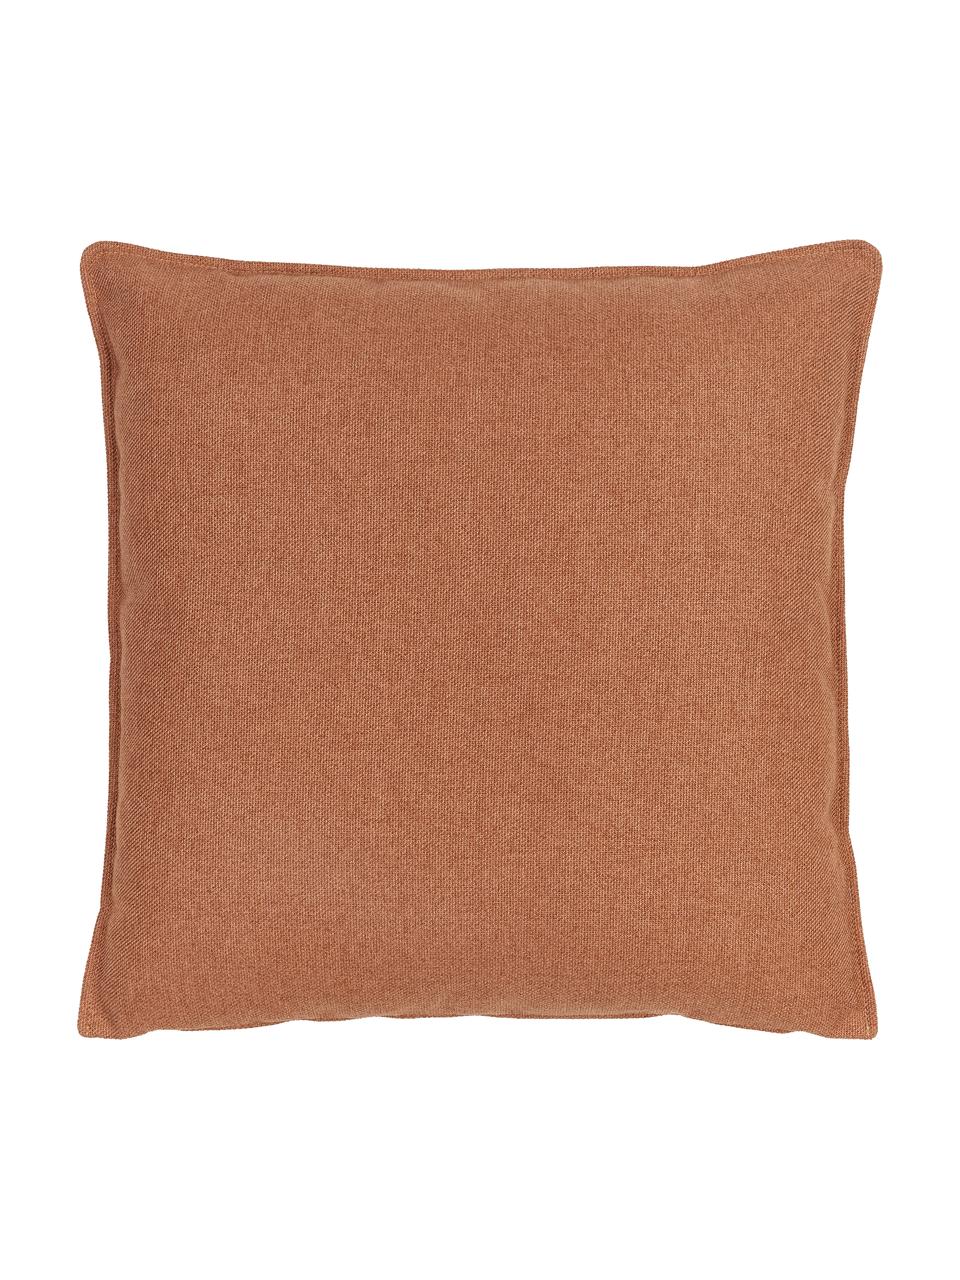 Sofa-Kissen Lennon in Nougat, Bezug: 100% Polyester, Webstoff Nougat, B 60 x L 60 cm